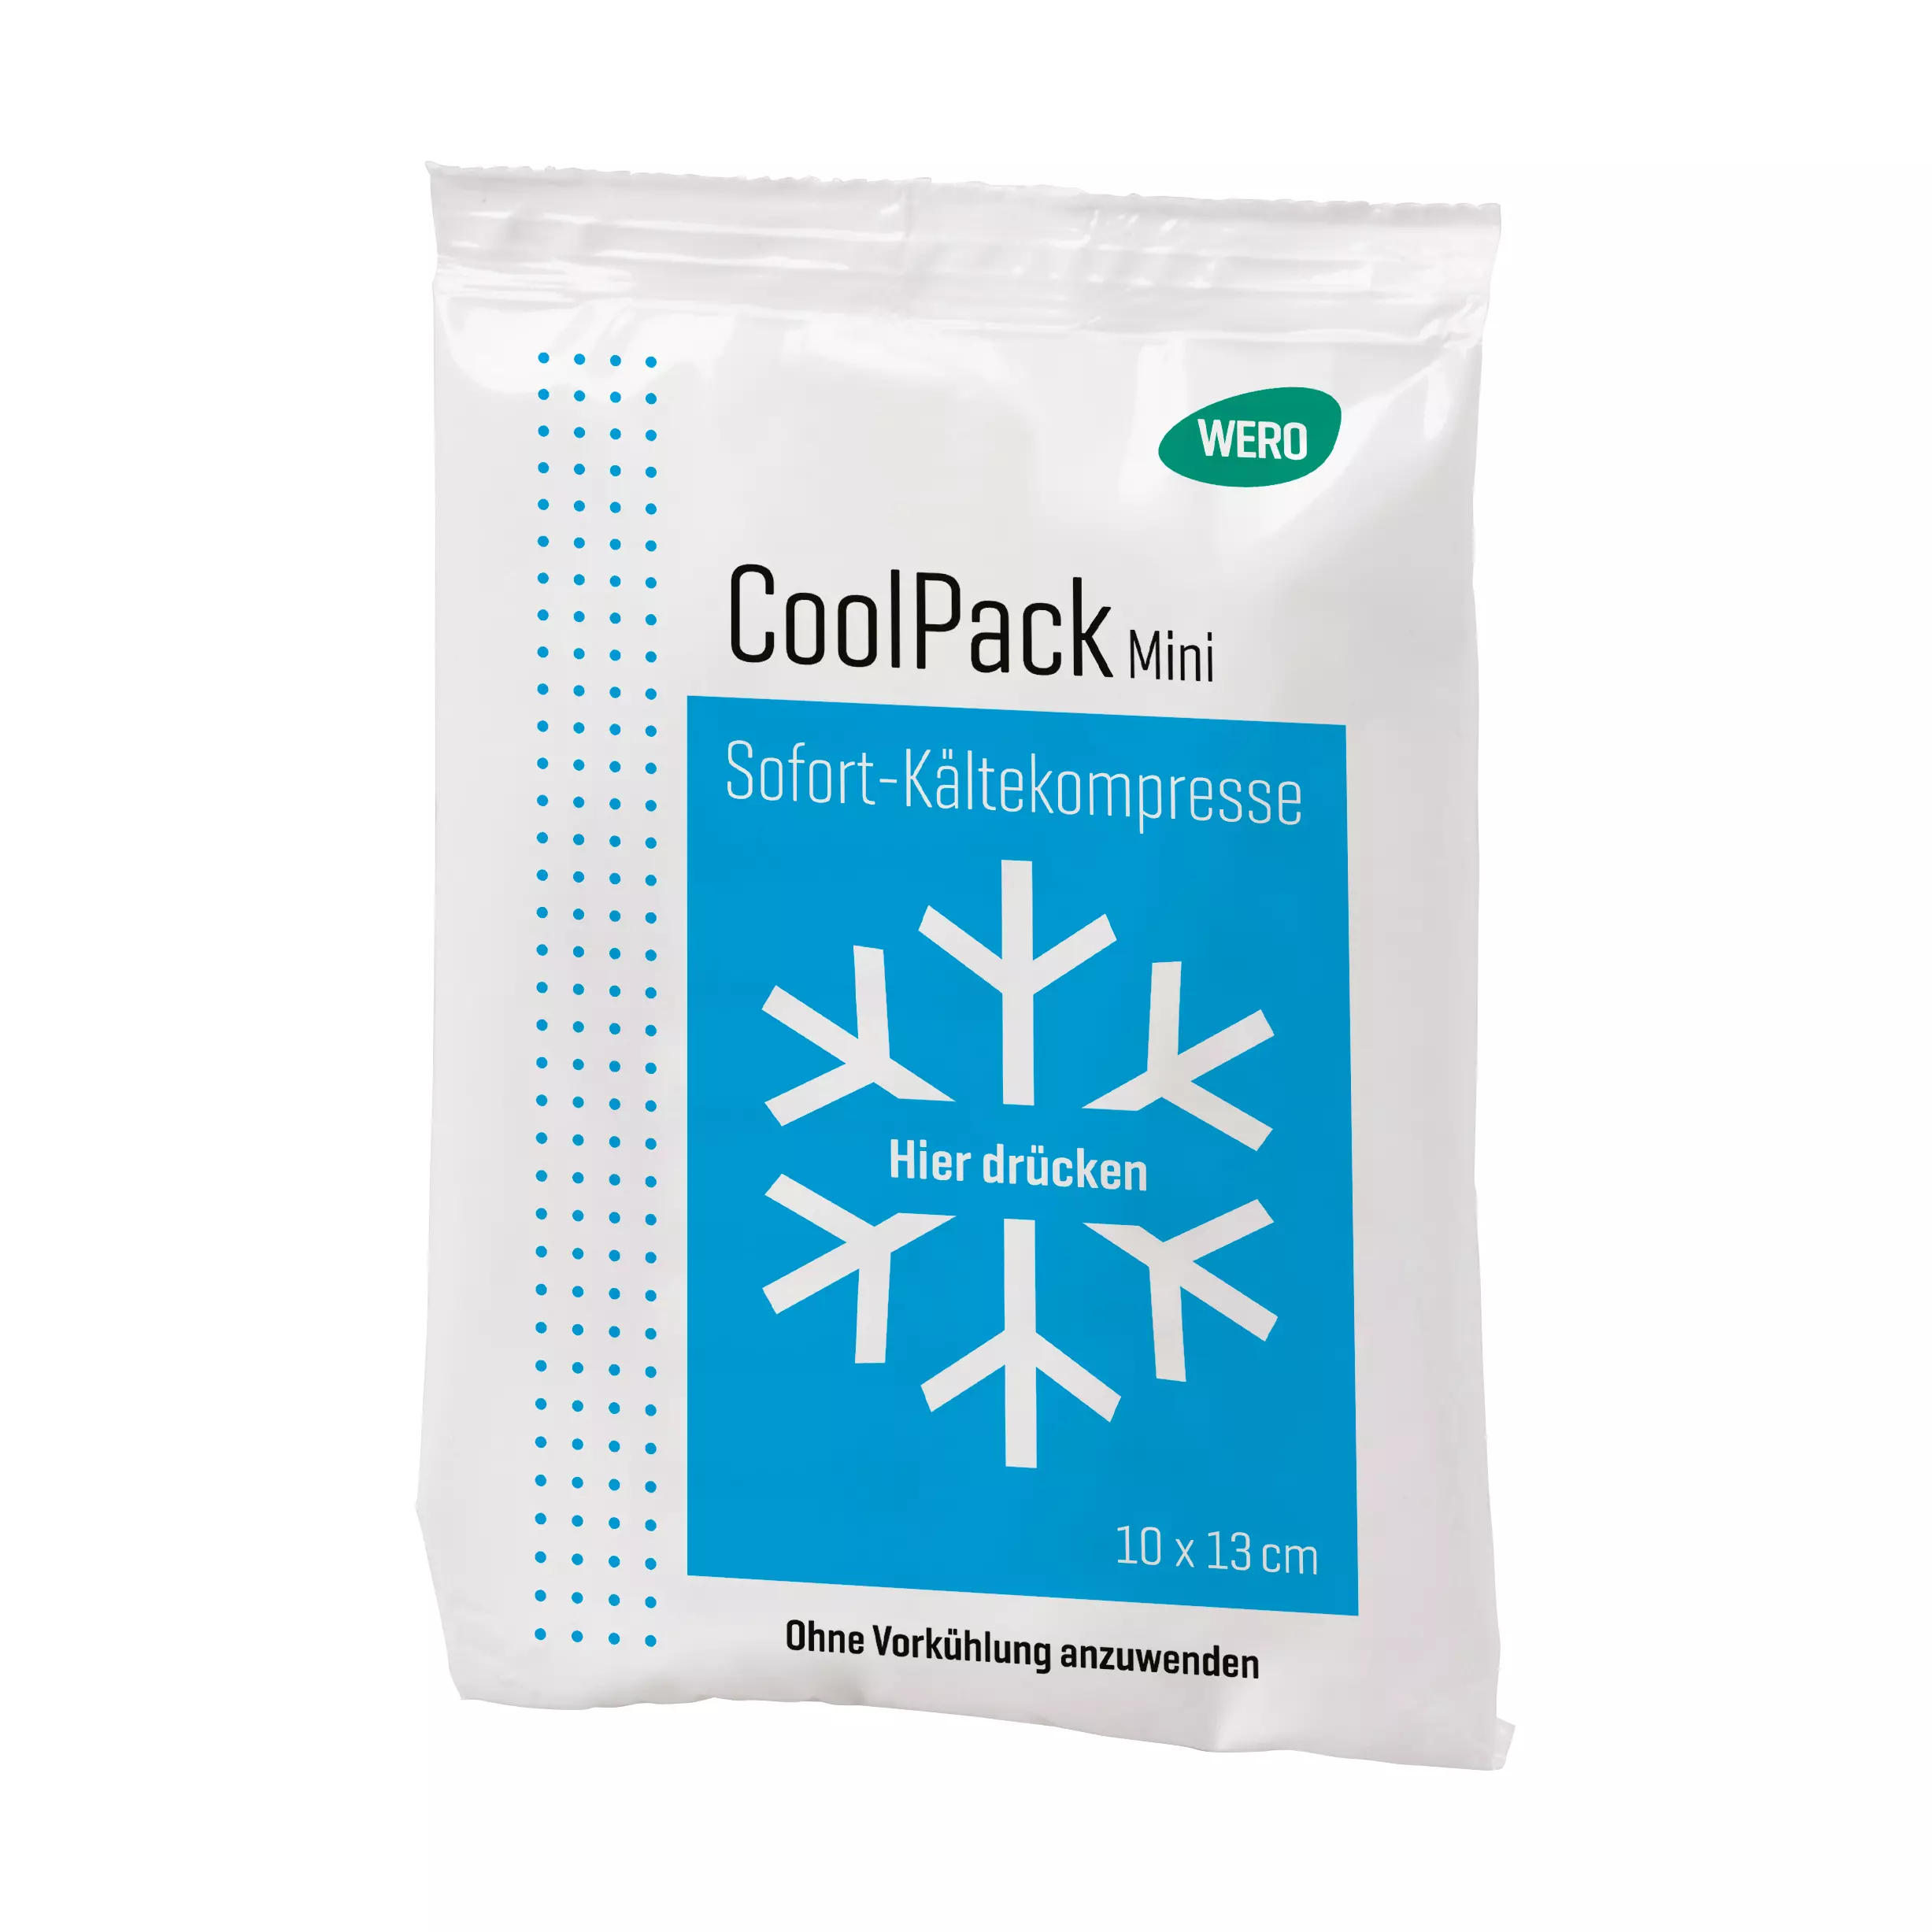 WERO CoolPack Sofort-Kältekompresse - Mini, 1 Stk